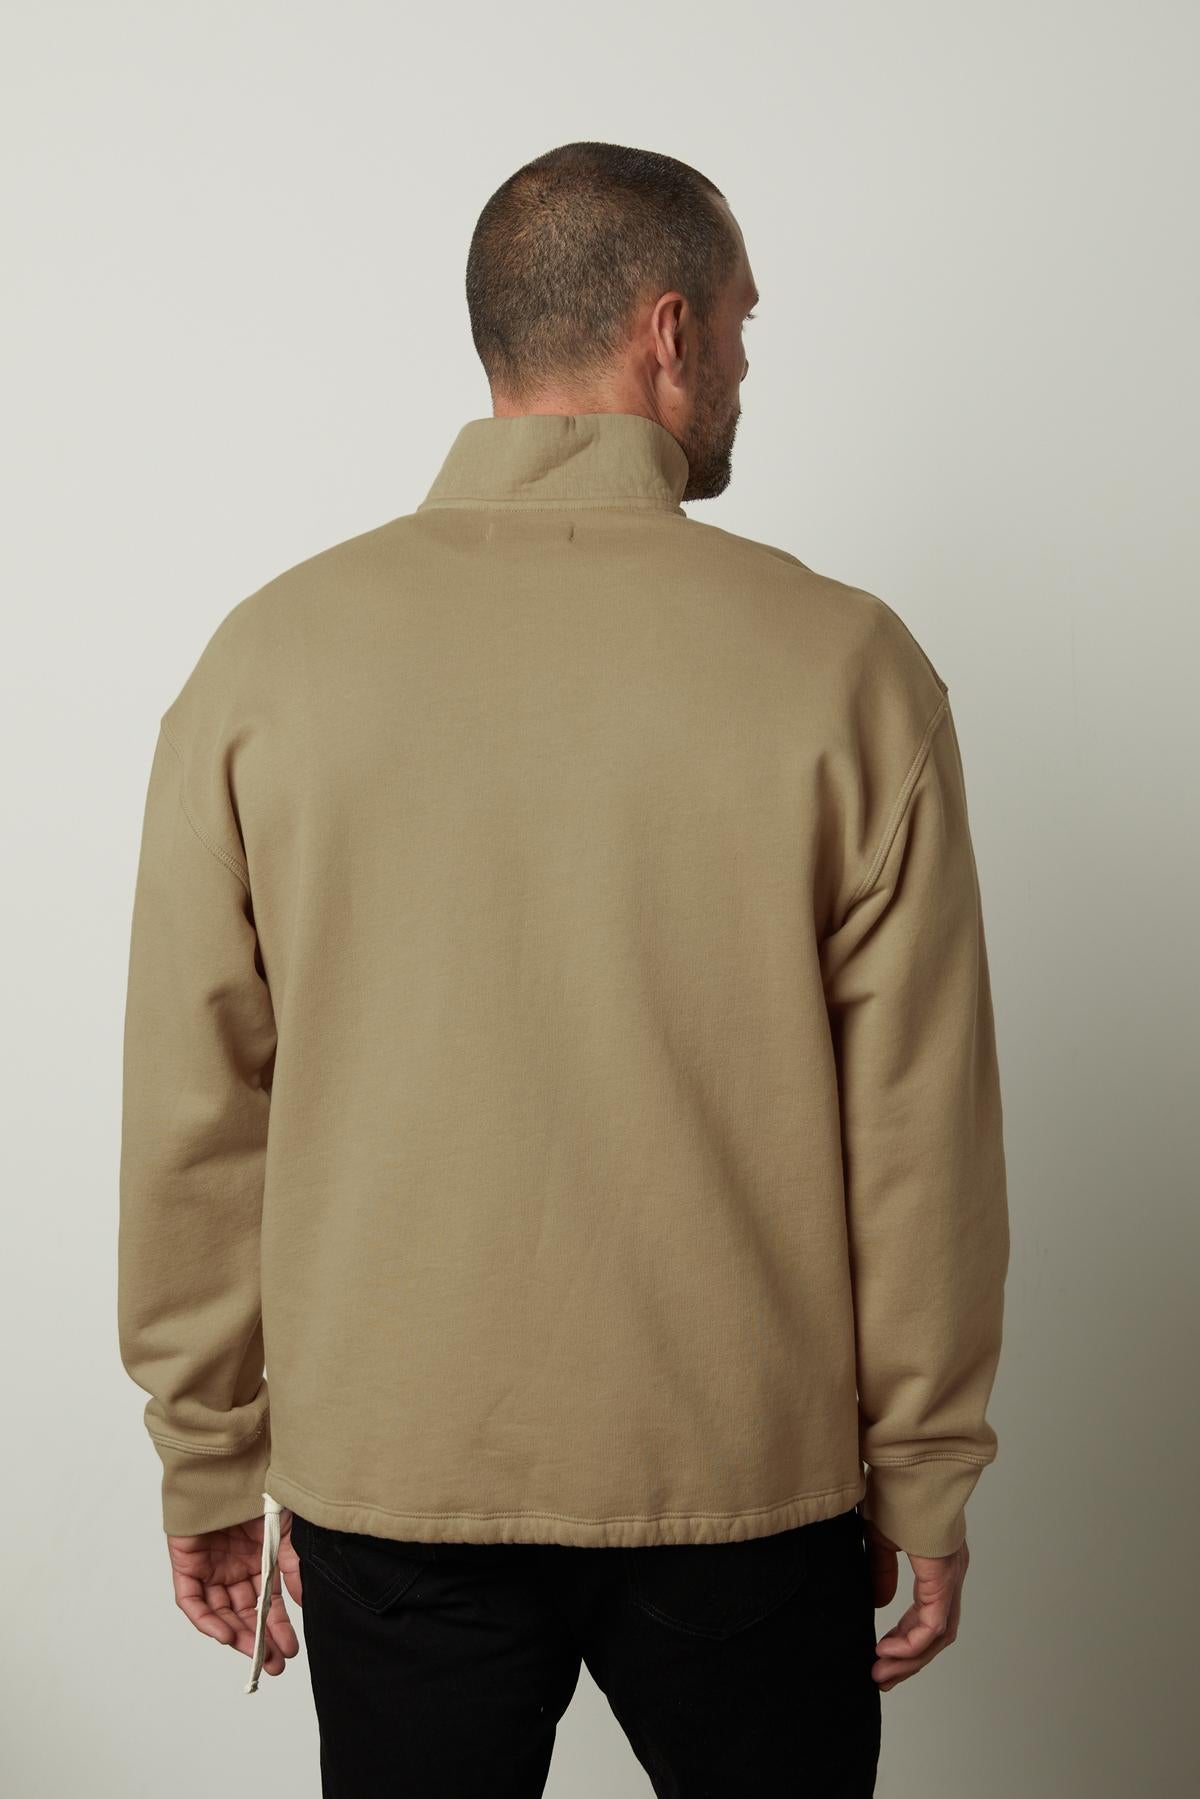   The back view of a man wearing a Velvet by Graham & Spencer BOSCO QUARTER-ZIP SWEATSHIRT made of soft brushed fleece. 